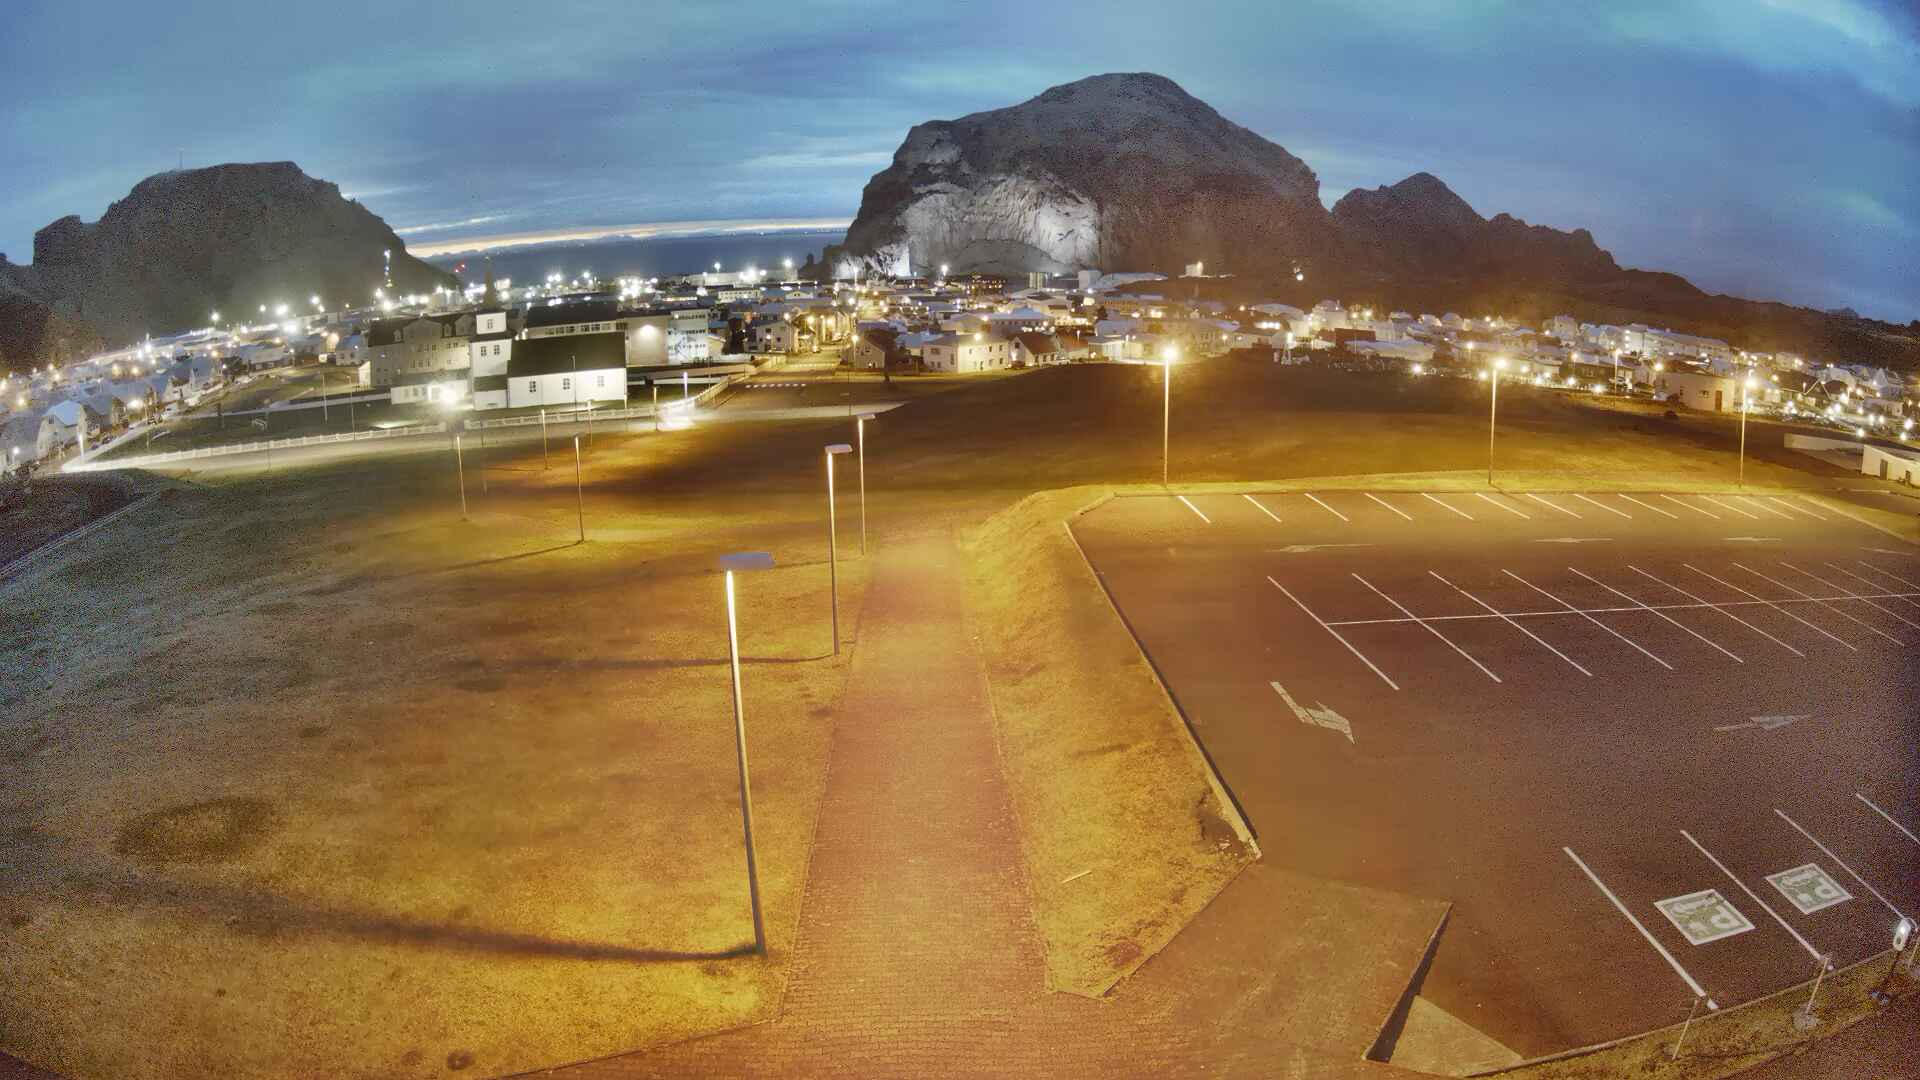 Vestmannaeyjar So. 02:33